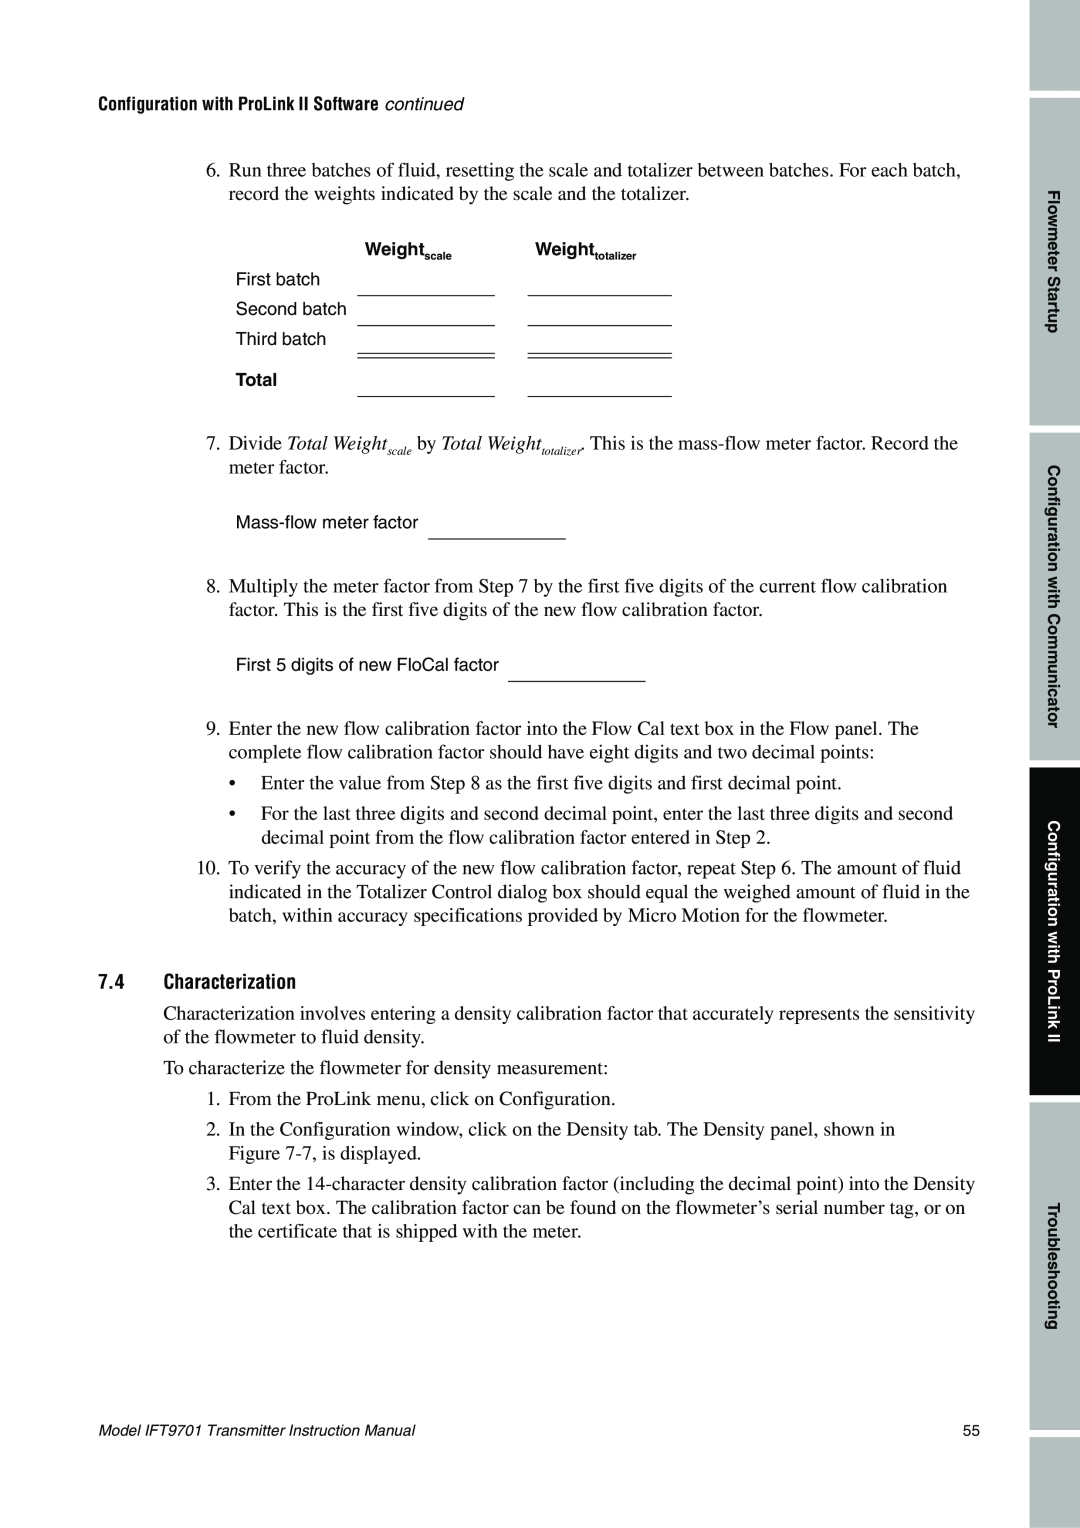 Emerson IFT9701 instruction manual 7.4Characterization 